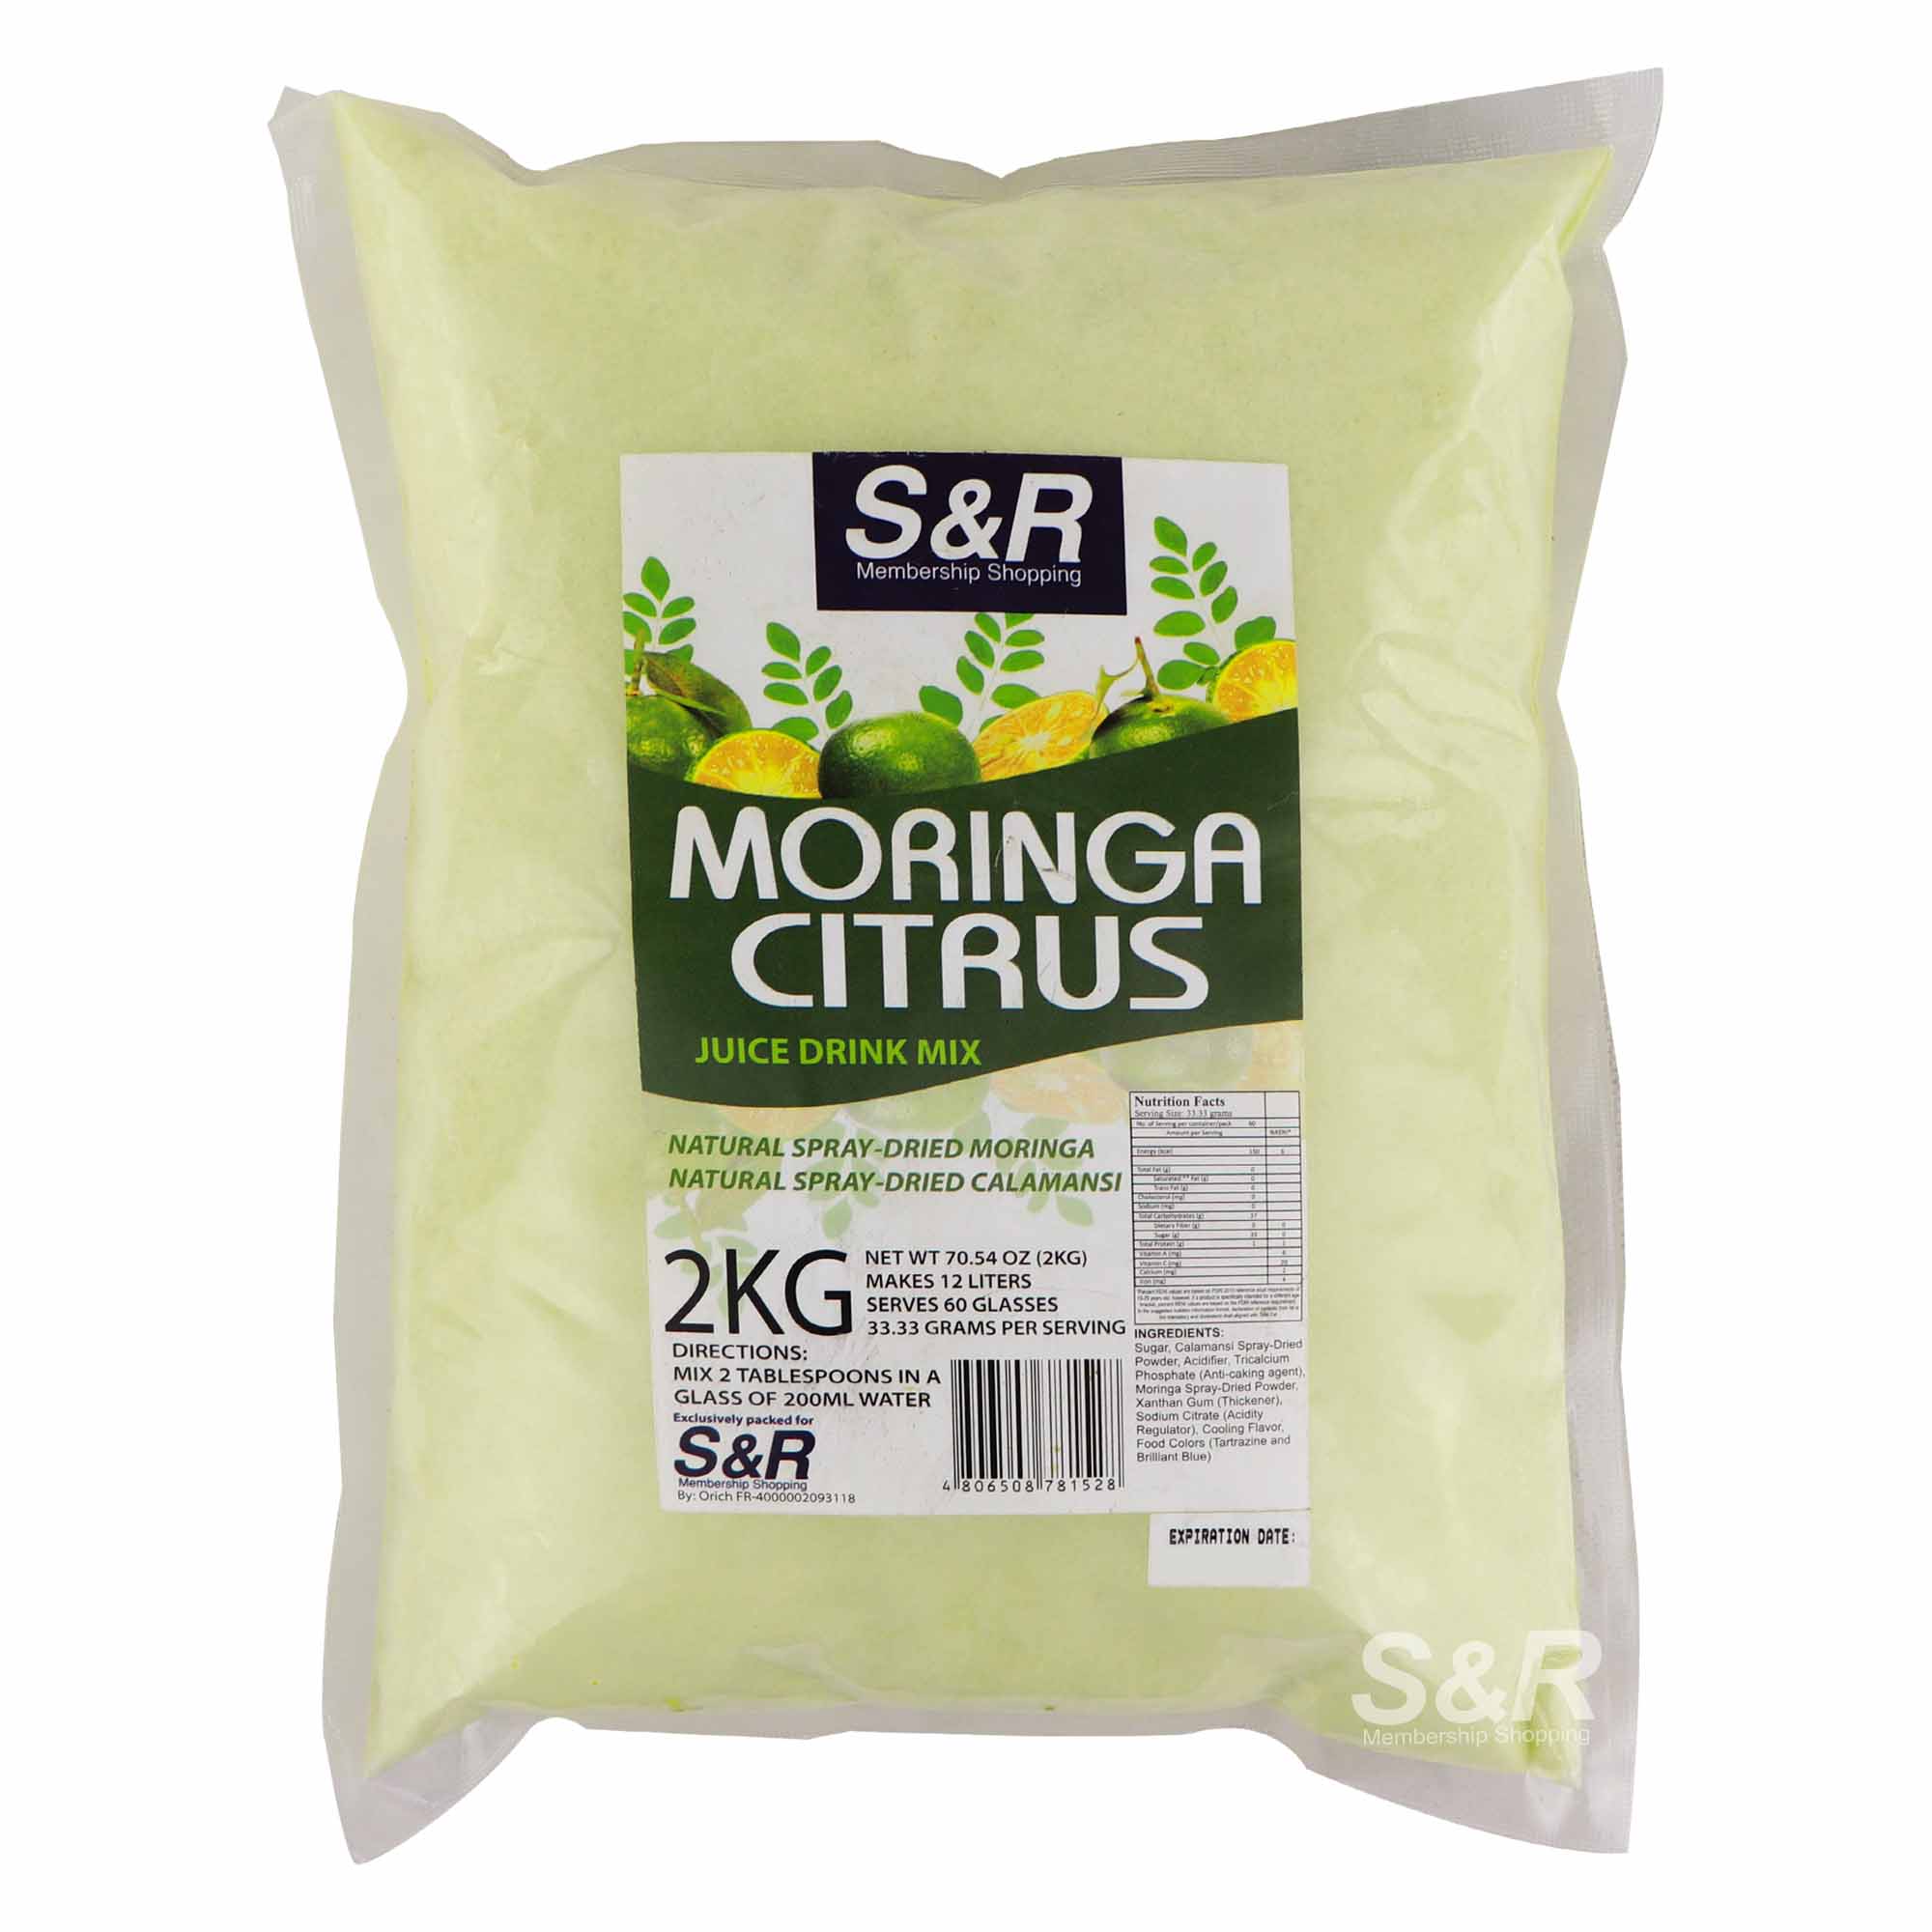 S&R Moringa Citrus Juice Drink Mix 2kg